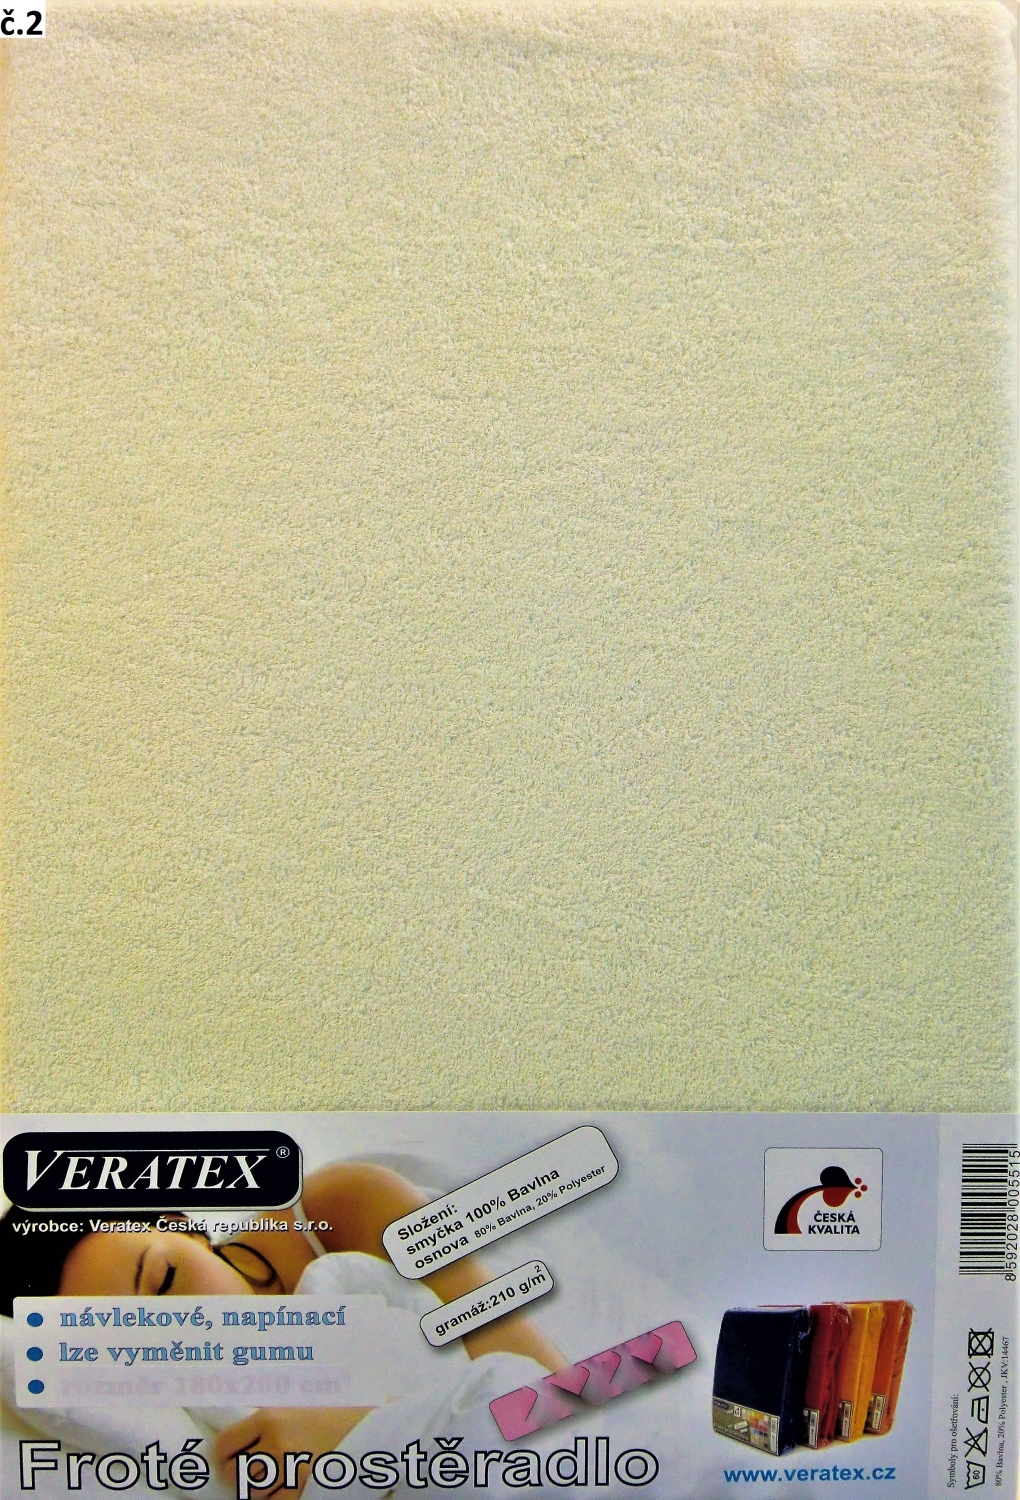 Veratex Froté prostěradlo dvoulůžko 180x200 cm (č. 2-smetanová)